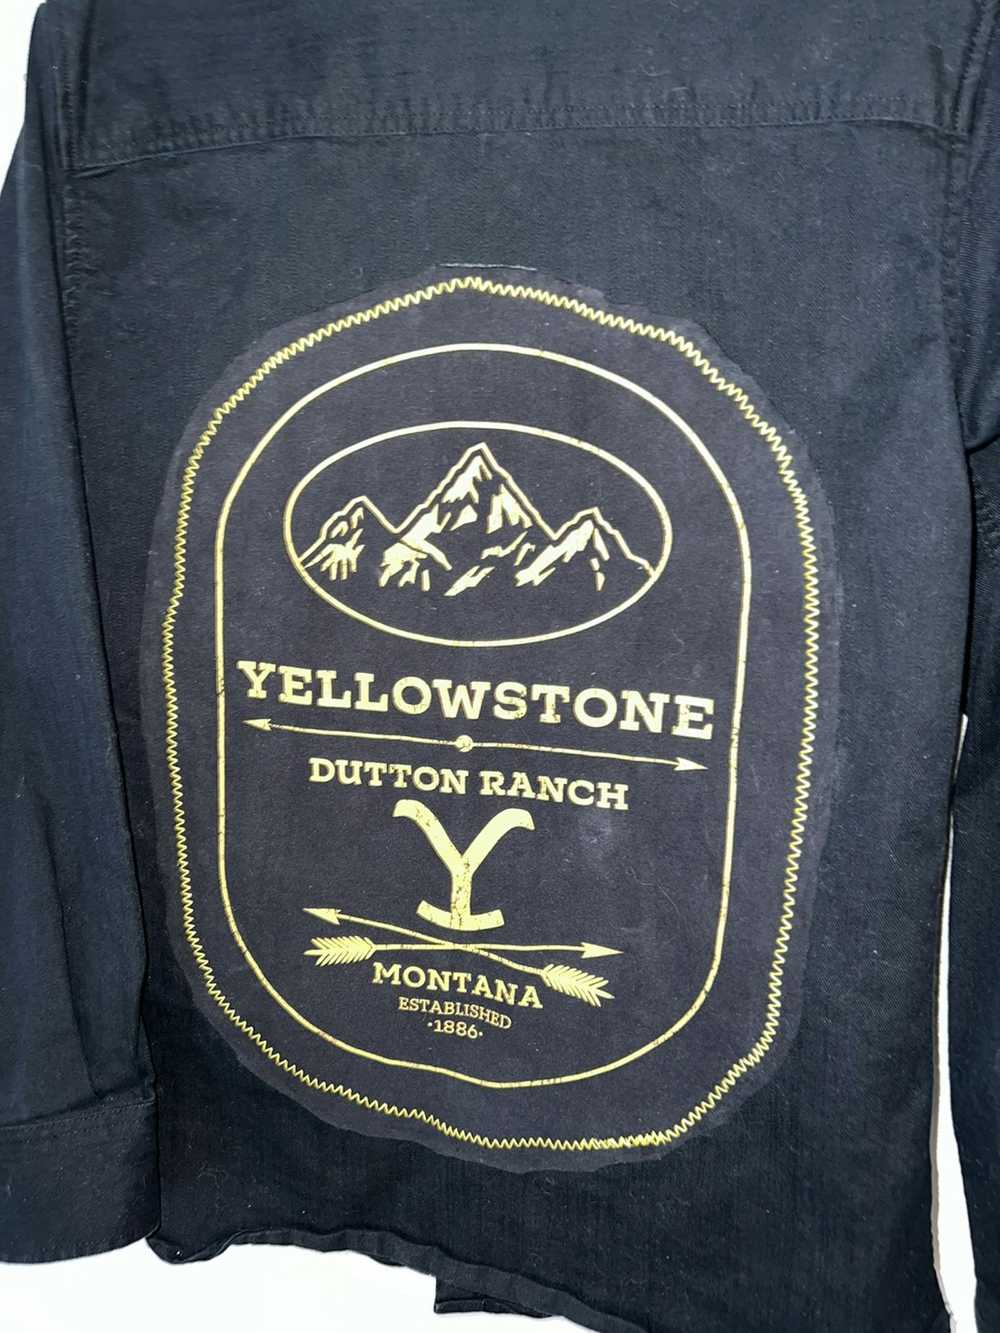 Mossimo Yellowstone TV Show Jacket - image 3